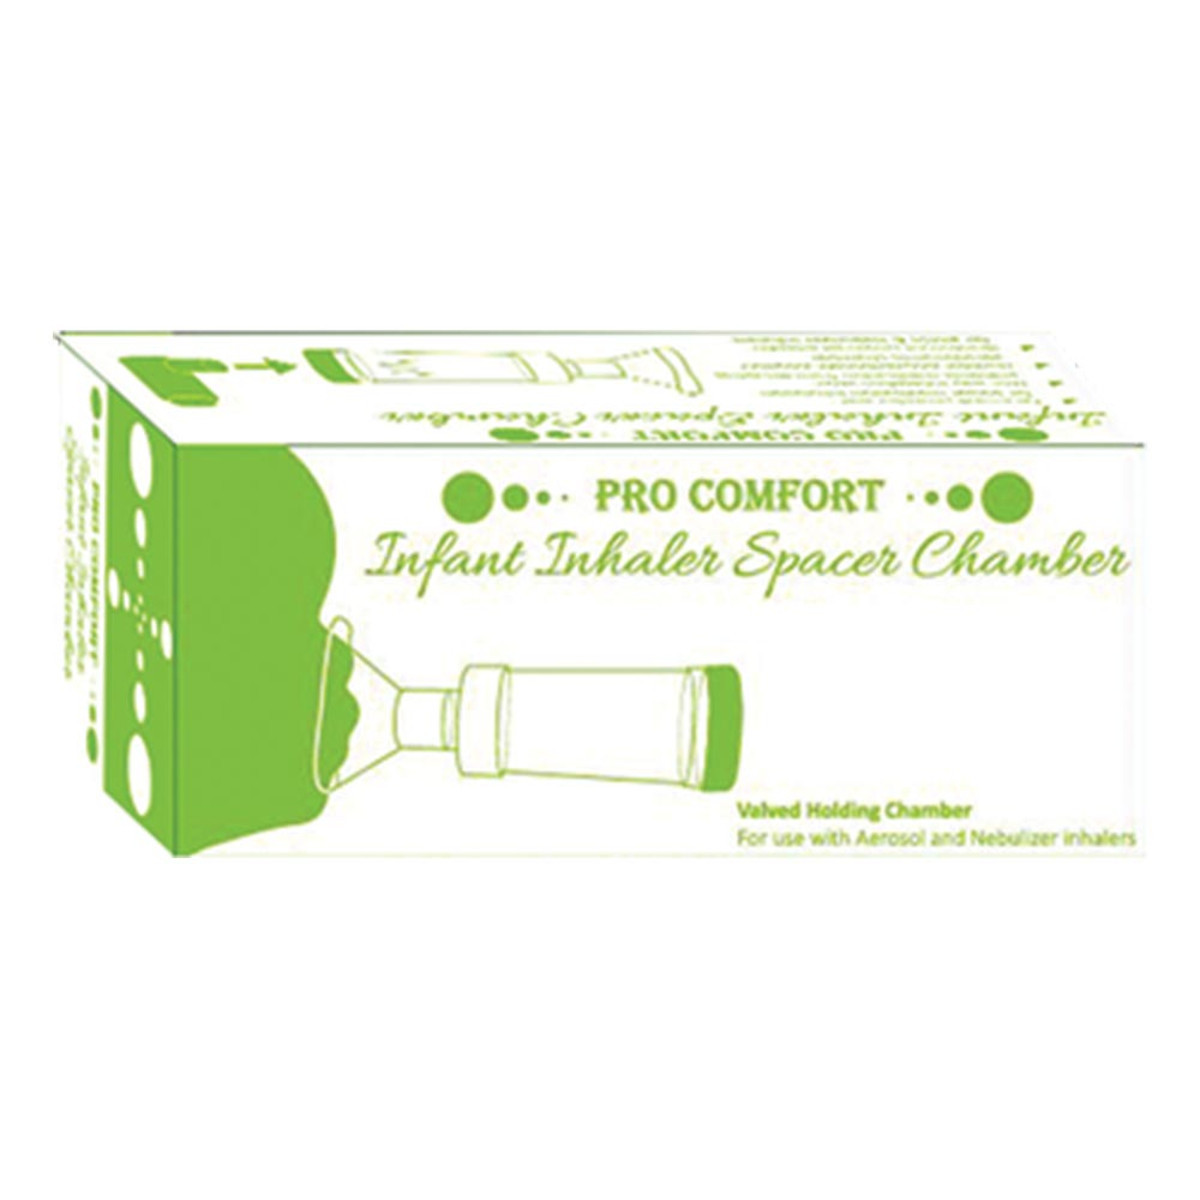 Homeaide Infant Inhaler Spacer Chamber